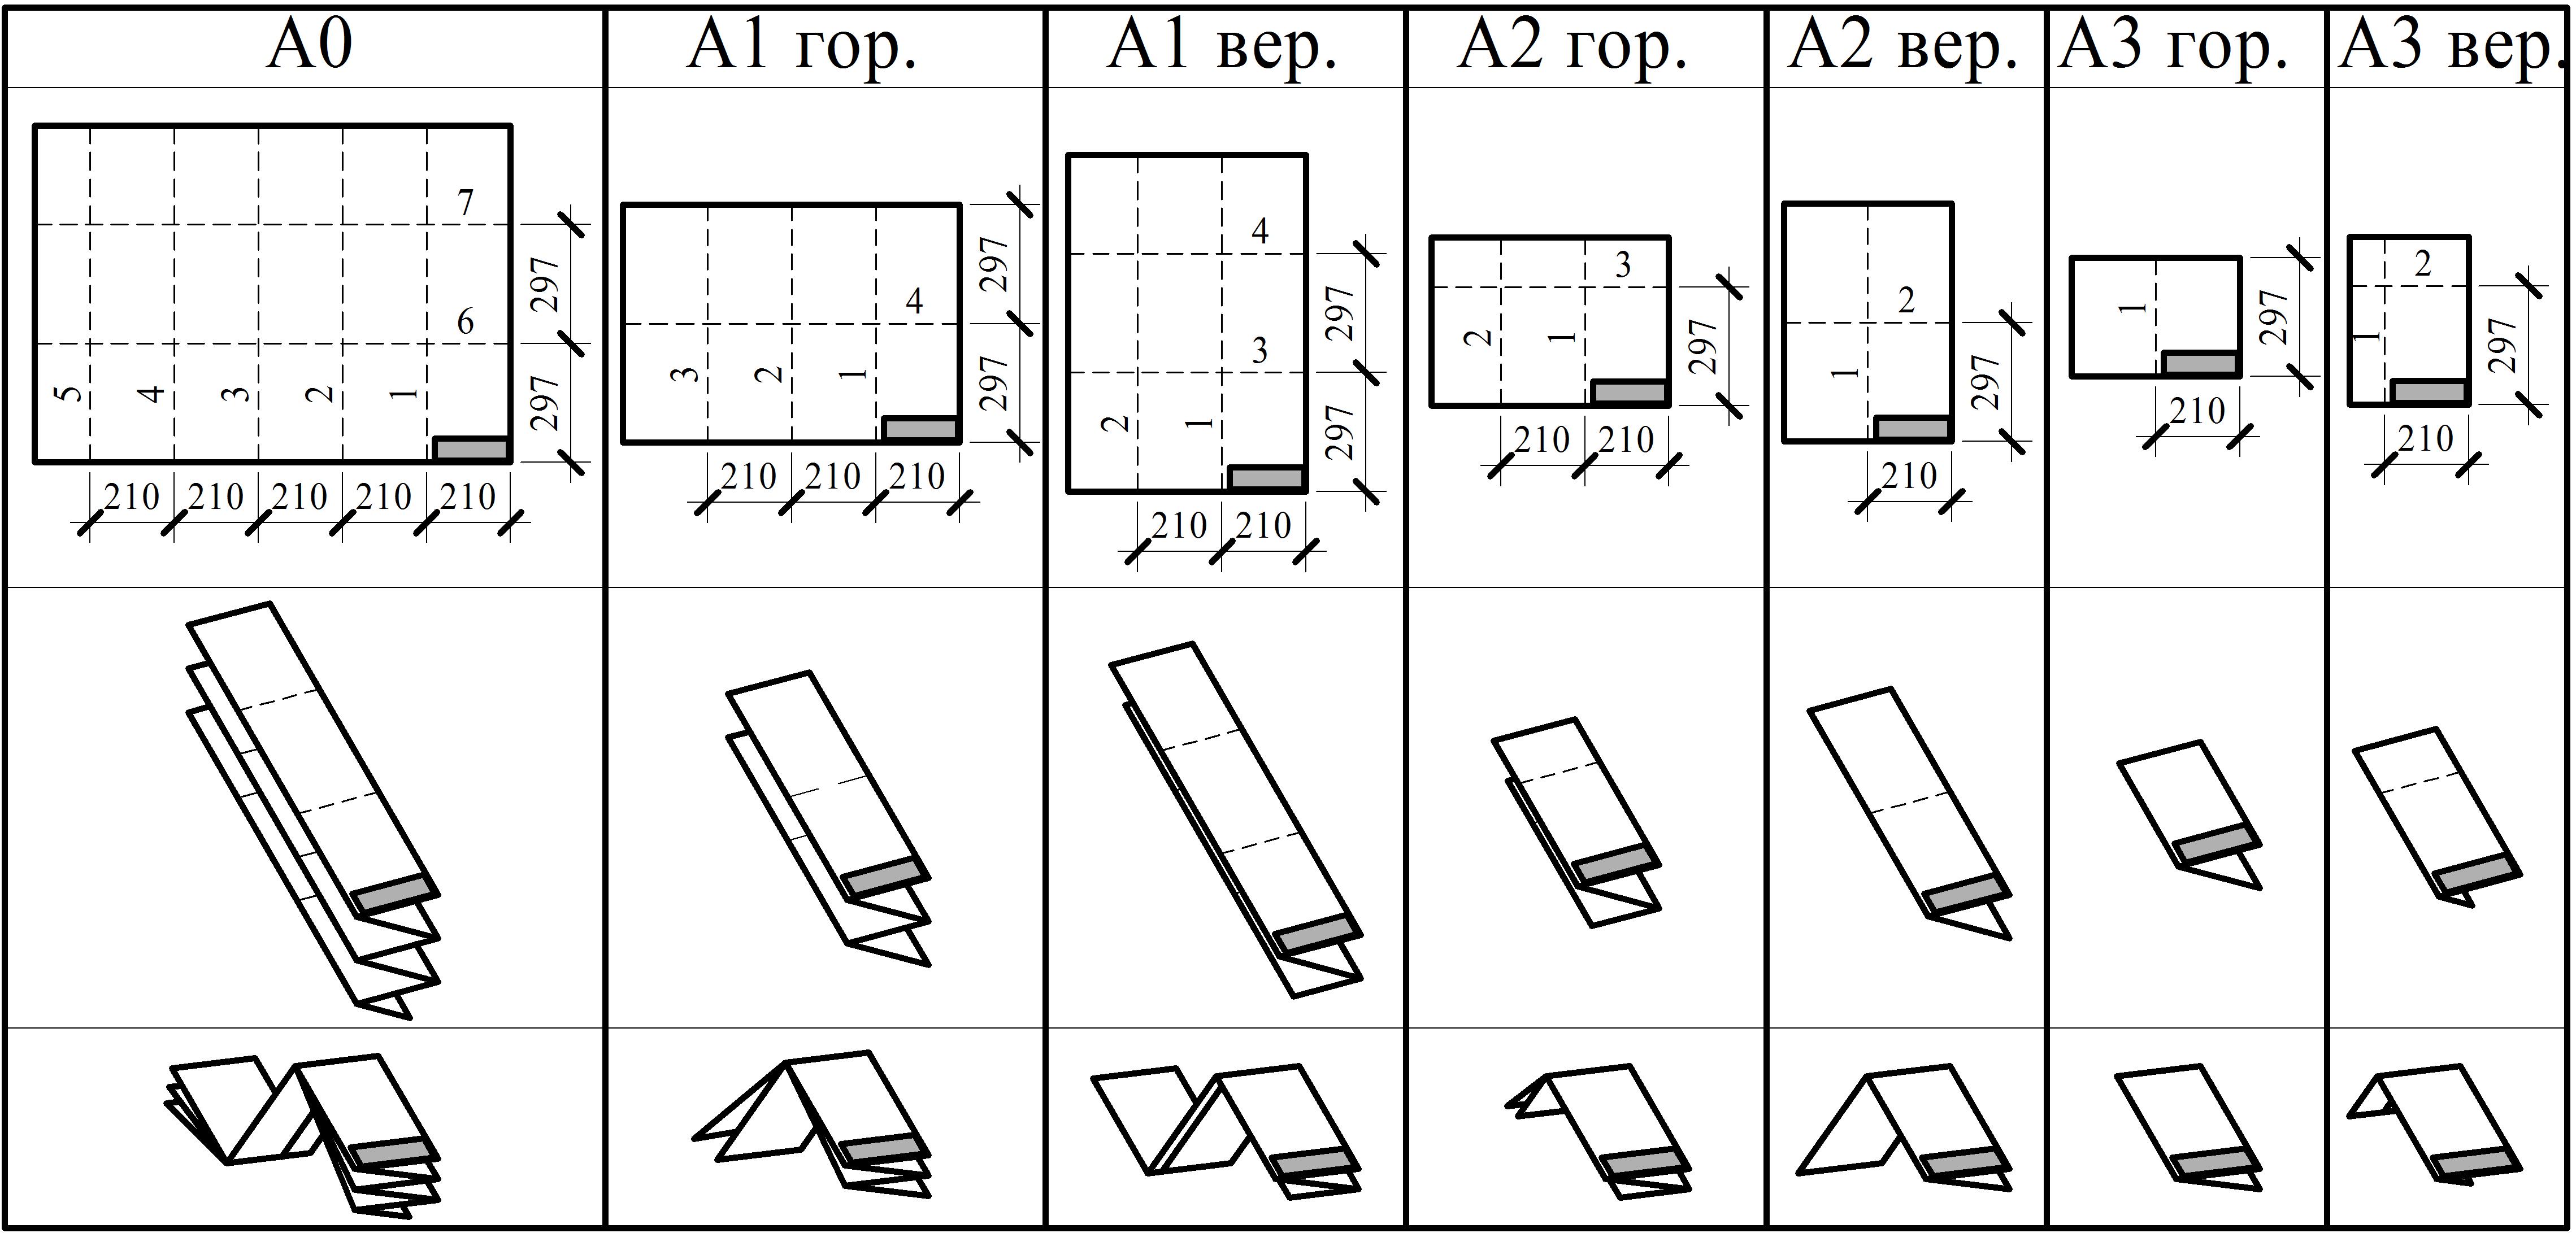 Складывание чертежей по ГОСТ 2.501 Единая система конструкторской документации. Правила учета и хранения.Складывание чертежей формата А0, А1, А2, А3 в А4 под брошюровку. Фальцовка чертежа А0, А1, А2, А3 по ГОСТу под брошюровку. Вариант 1.